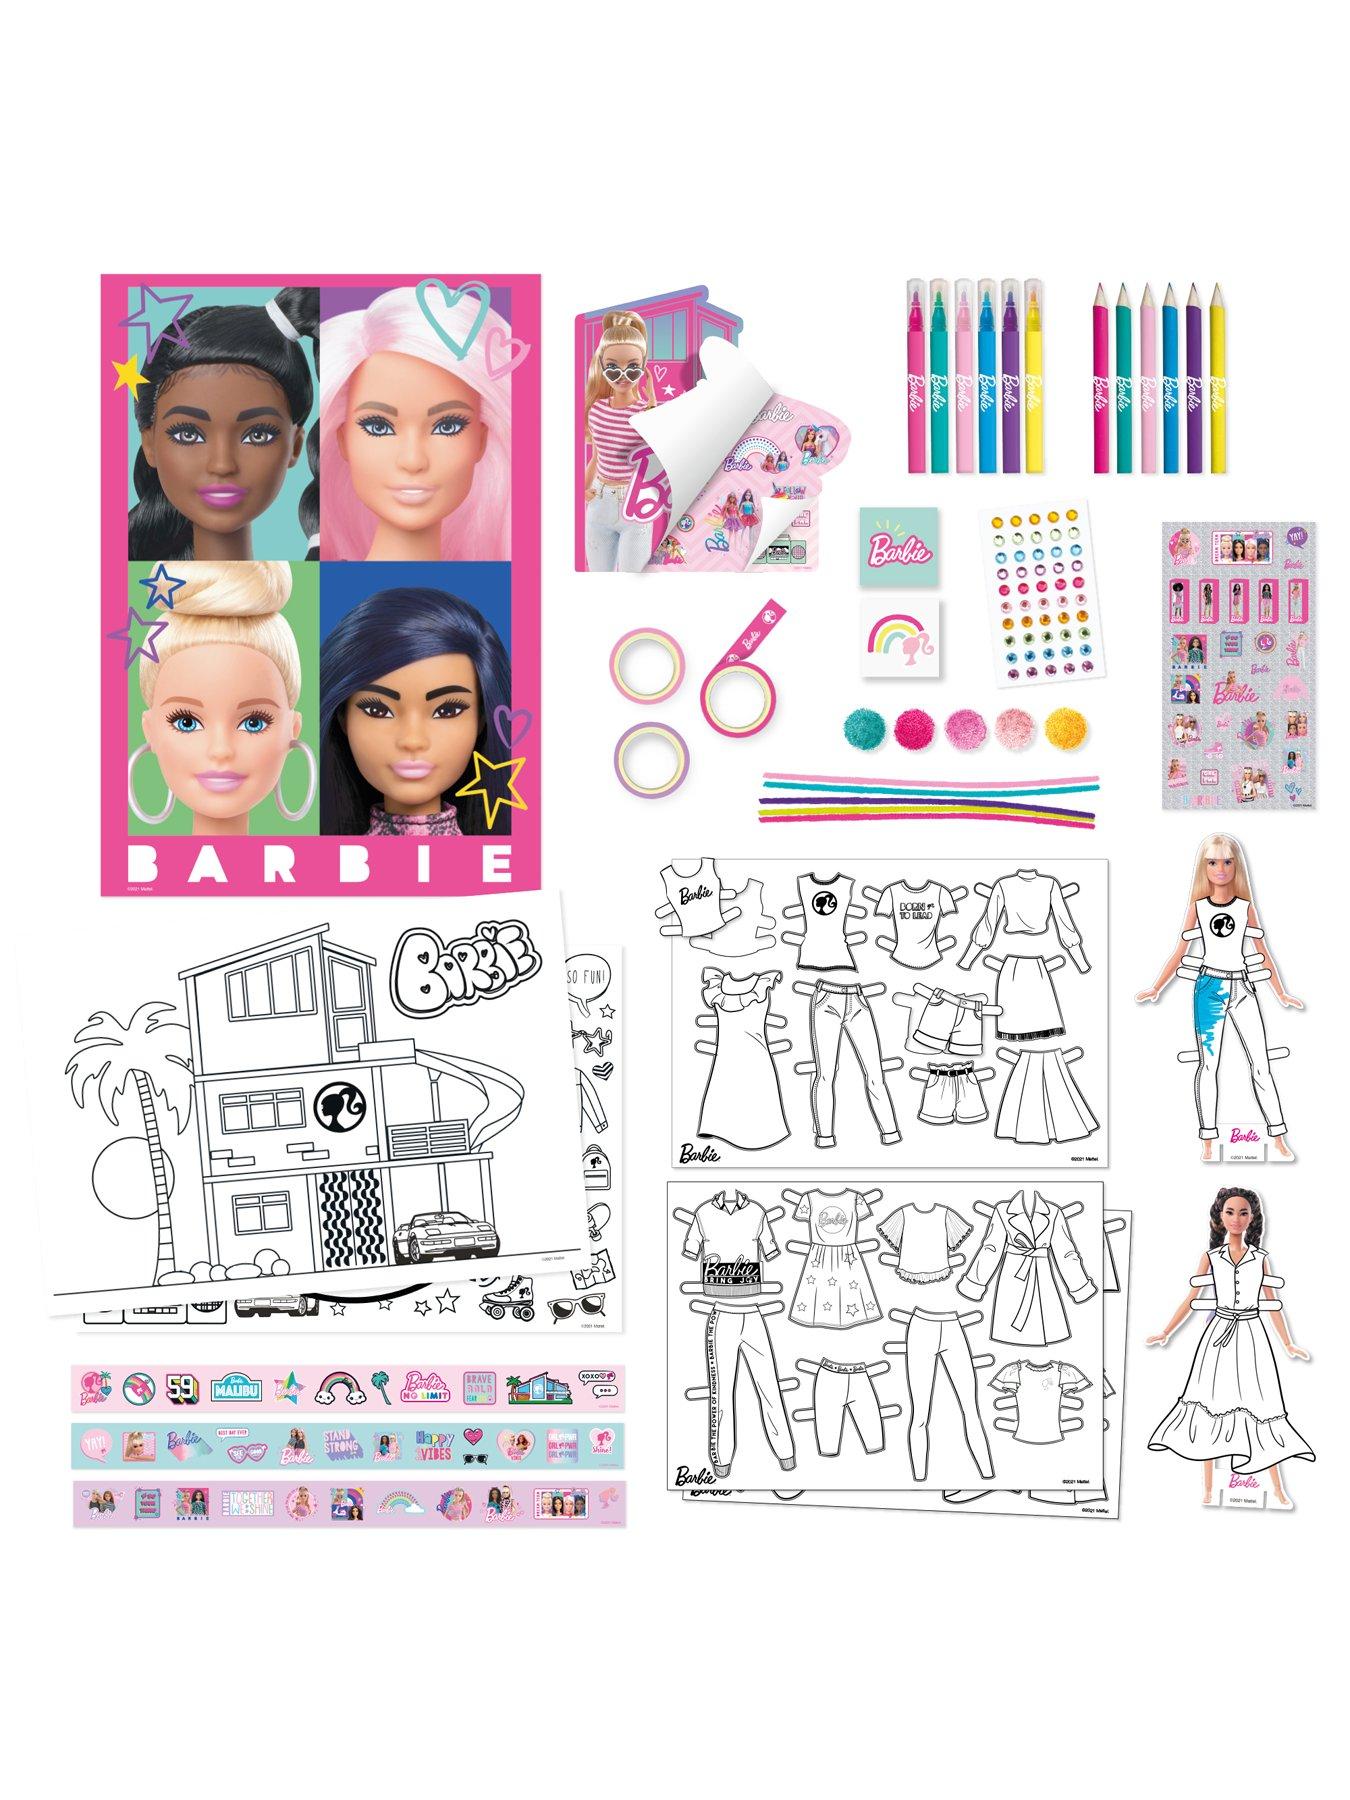 Barbie Arts and Crafts Studio in Box 1999